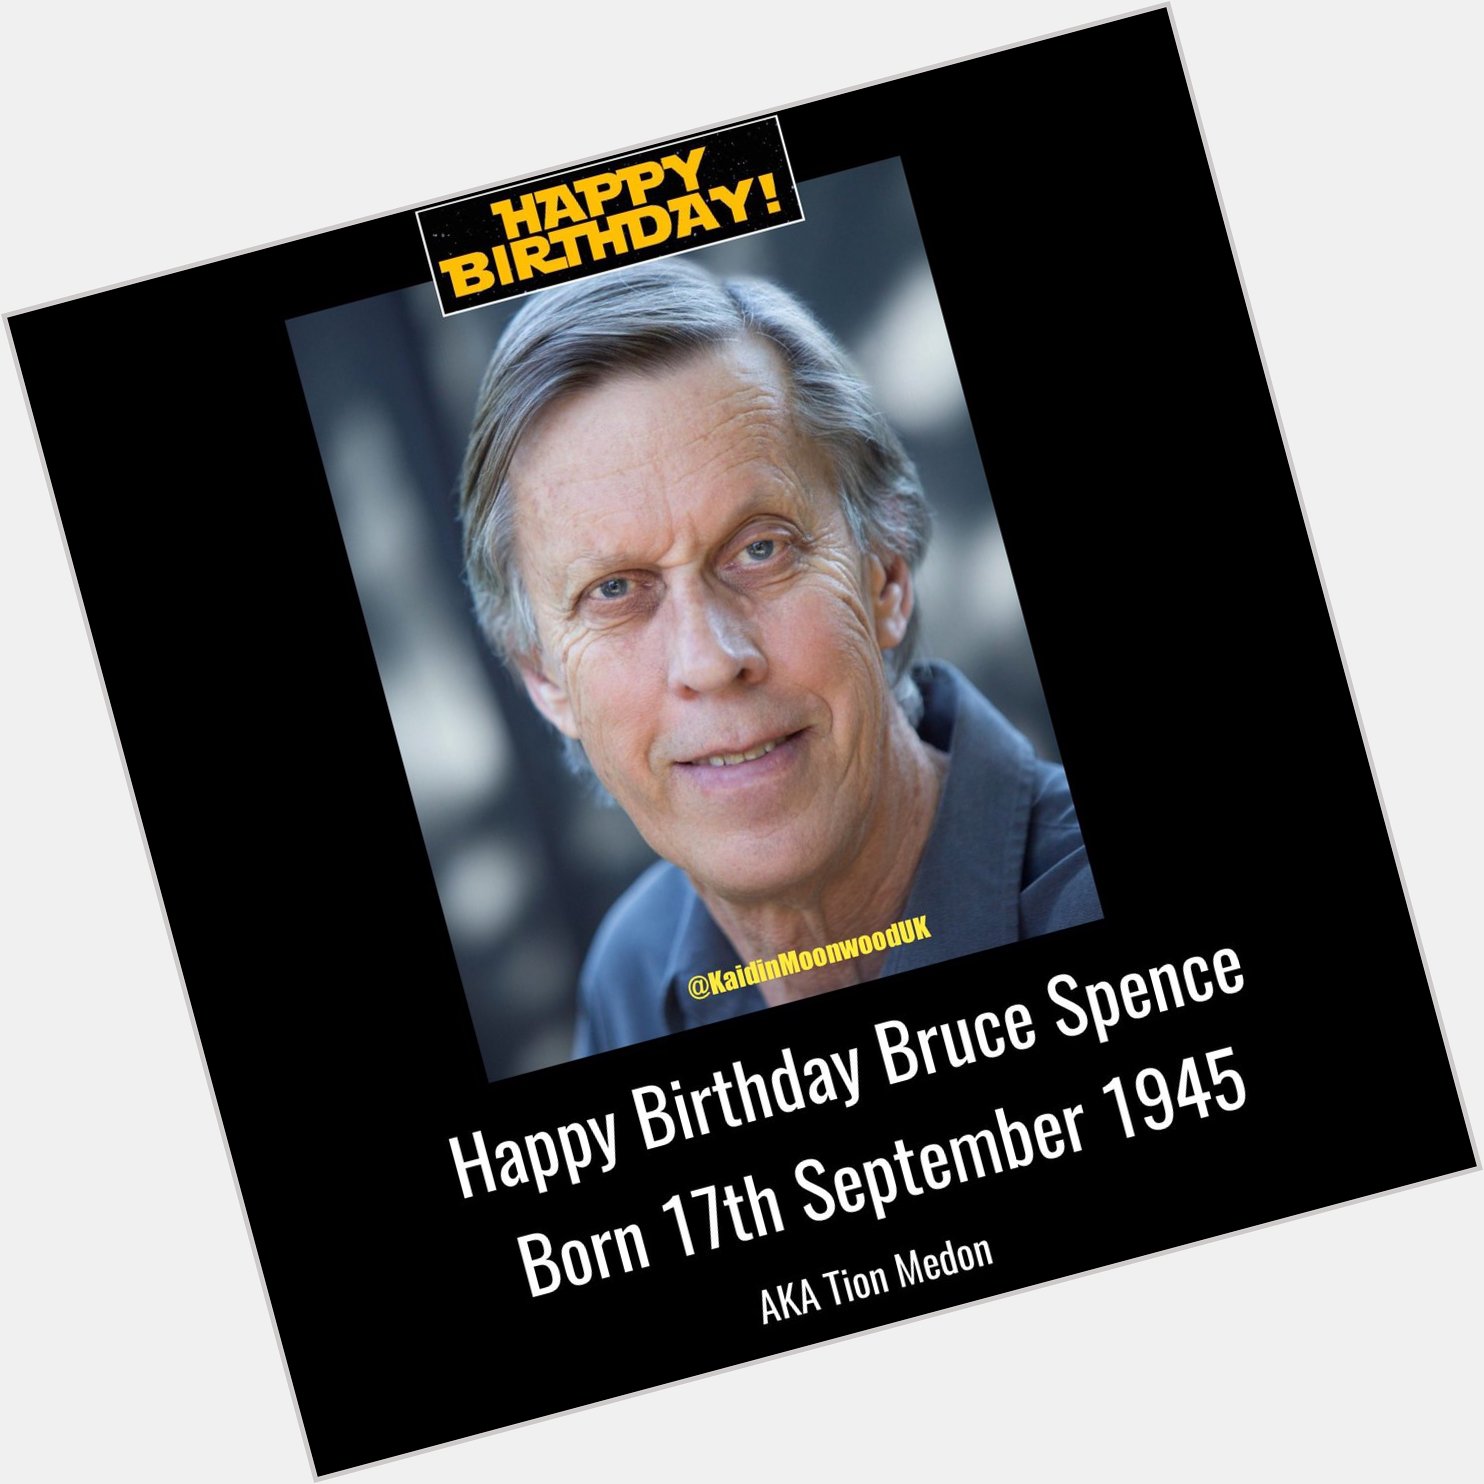 Happy Birthday Bruce Spence aka Tion Medon. Born 17th September 1945.   